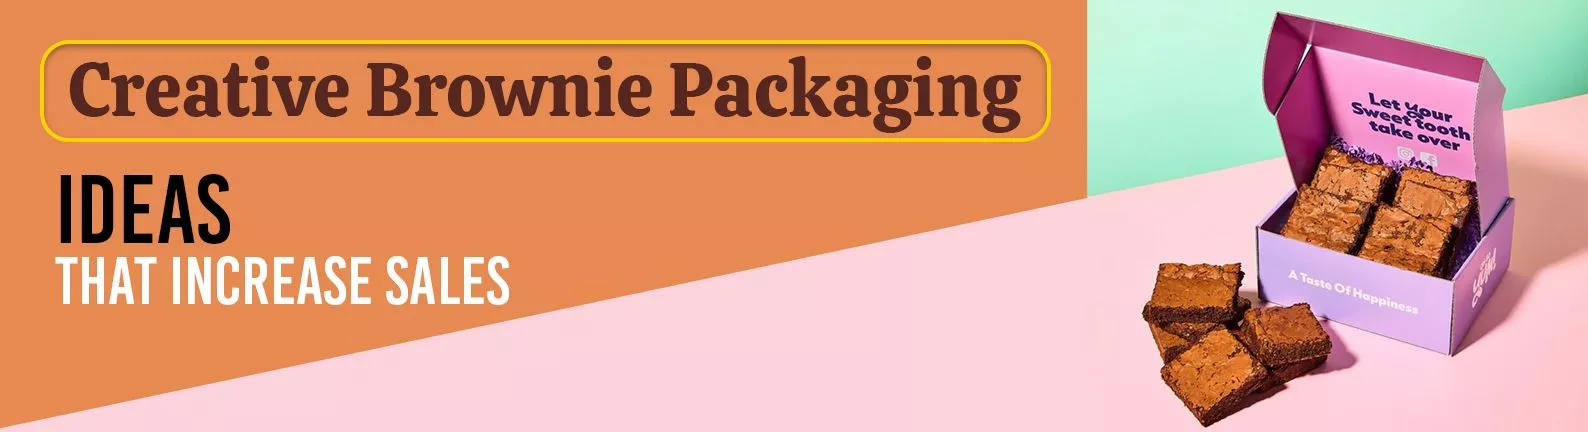 Creative-Brownie-Packaging-Ideas-That-Increase